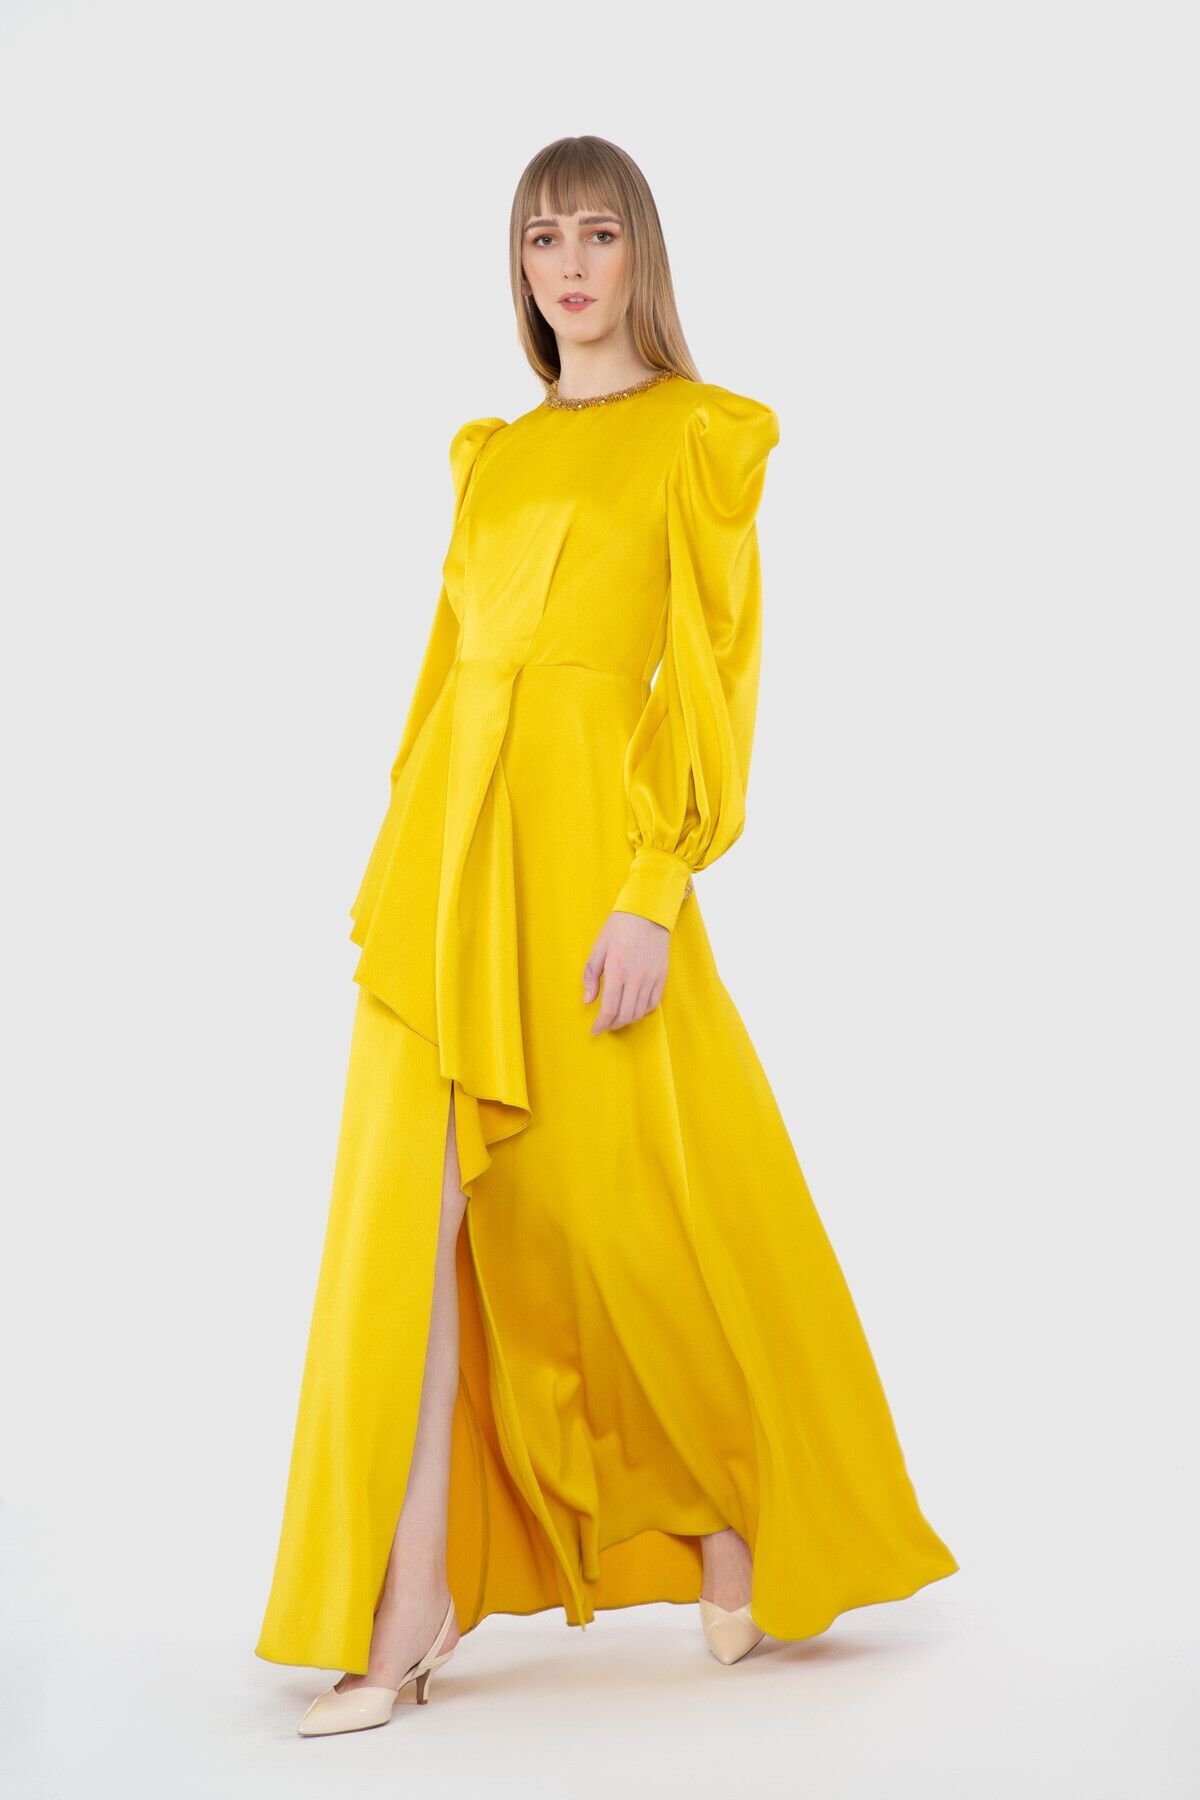 Stone Detailed Yellow Long Dress